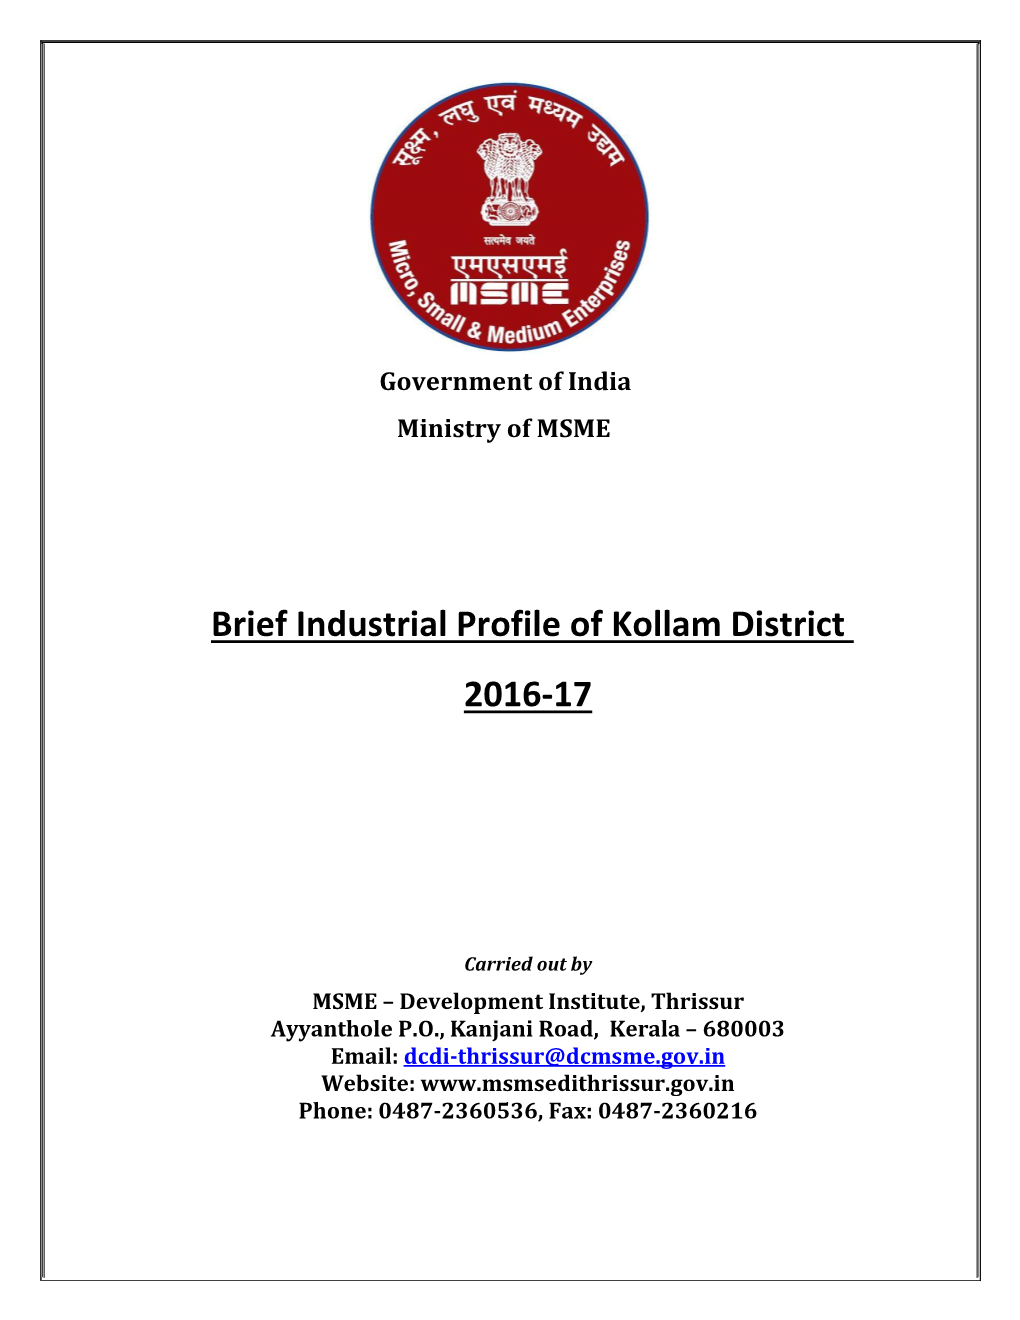 Brief Industrial Profile of Kollam District 2016-17